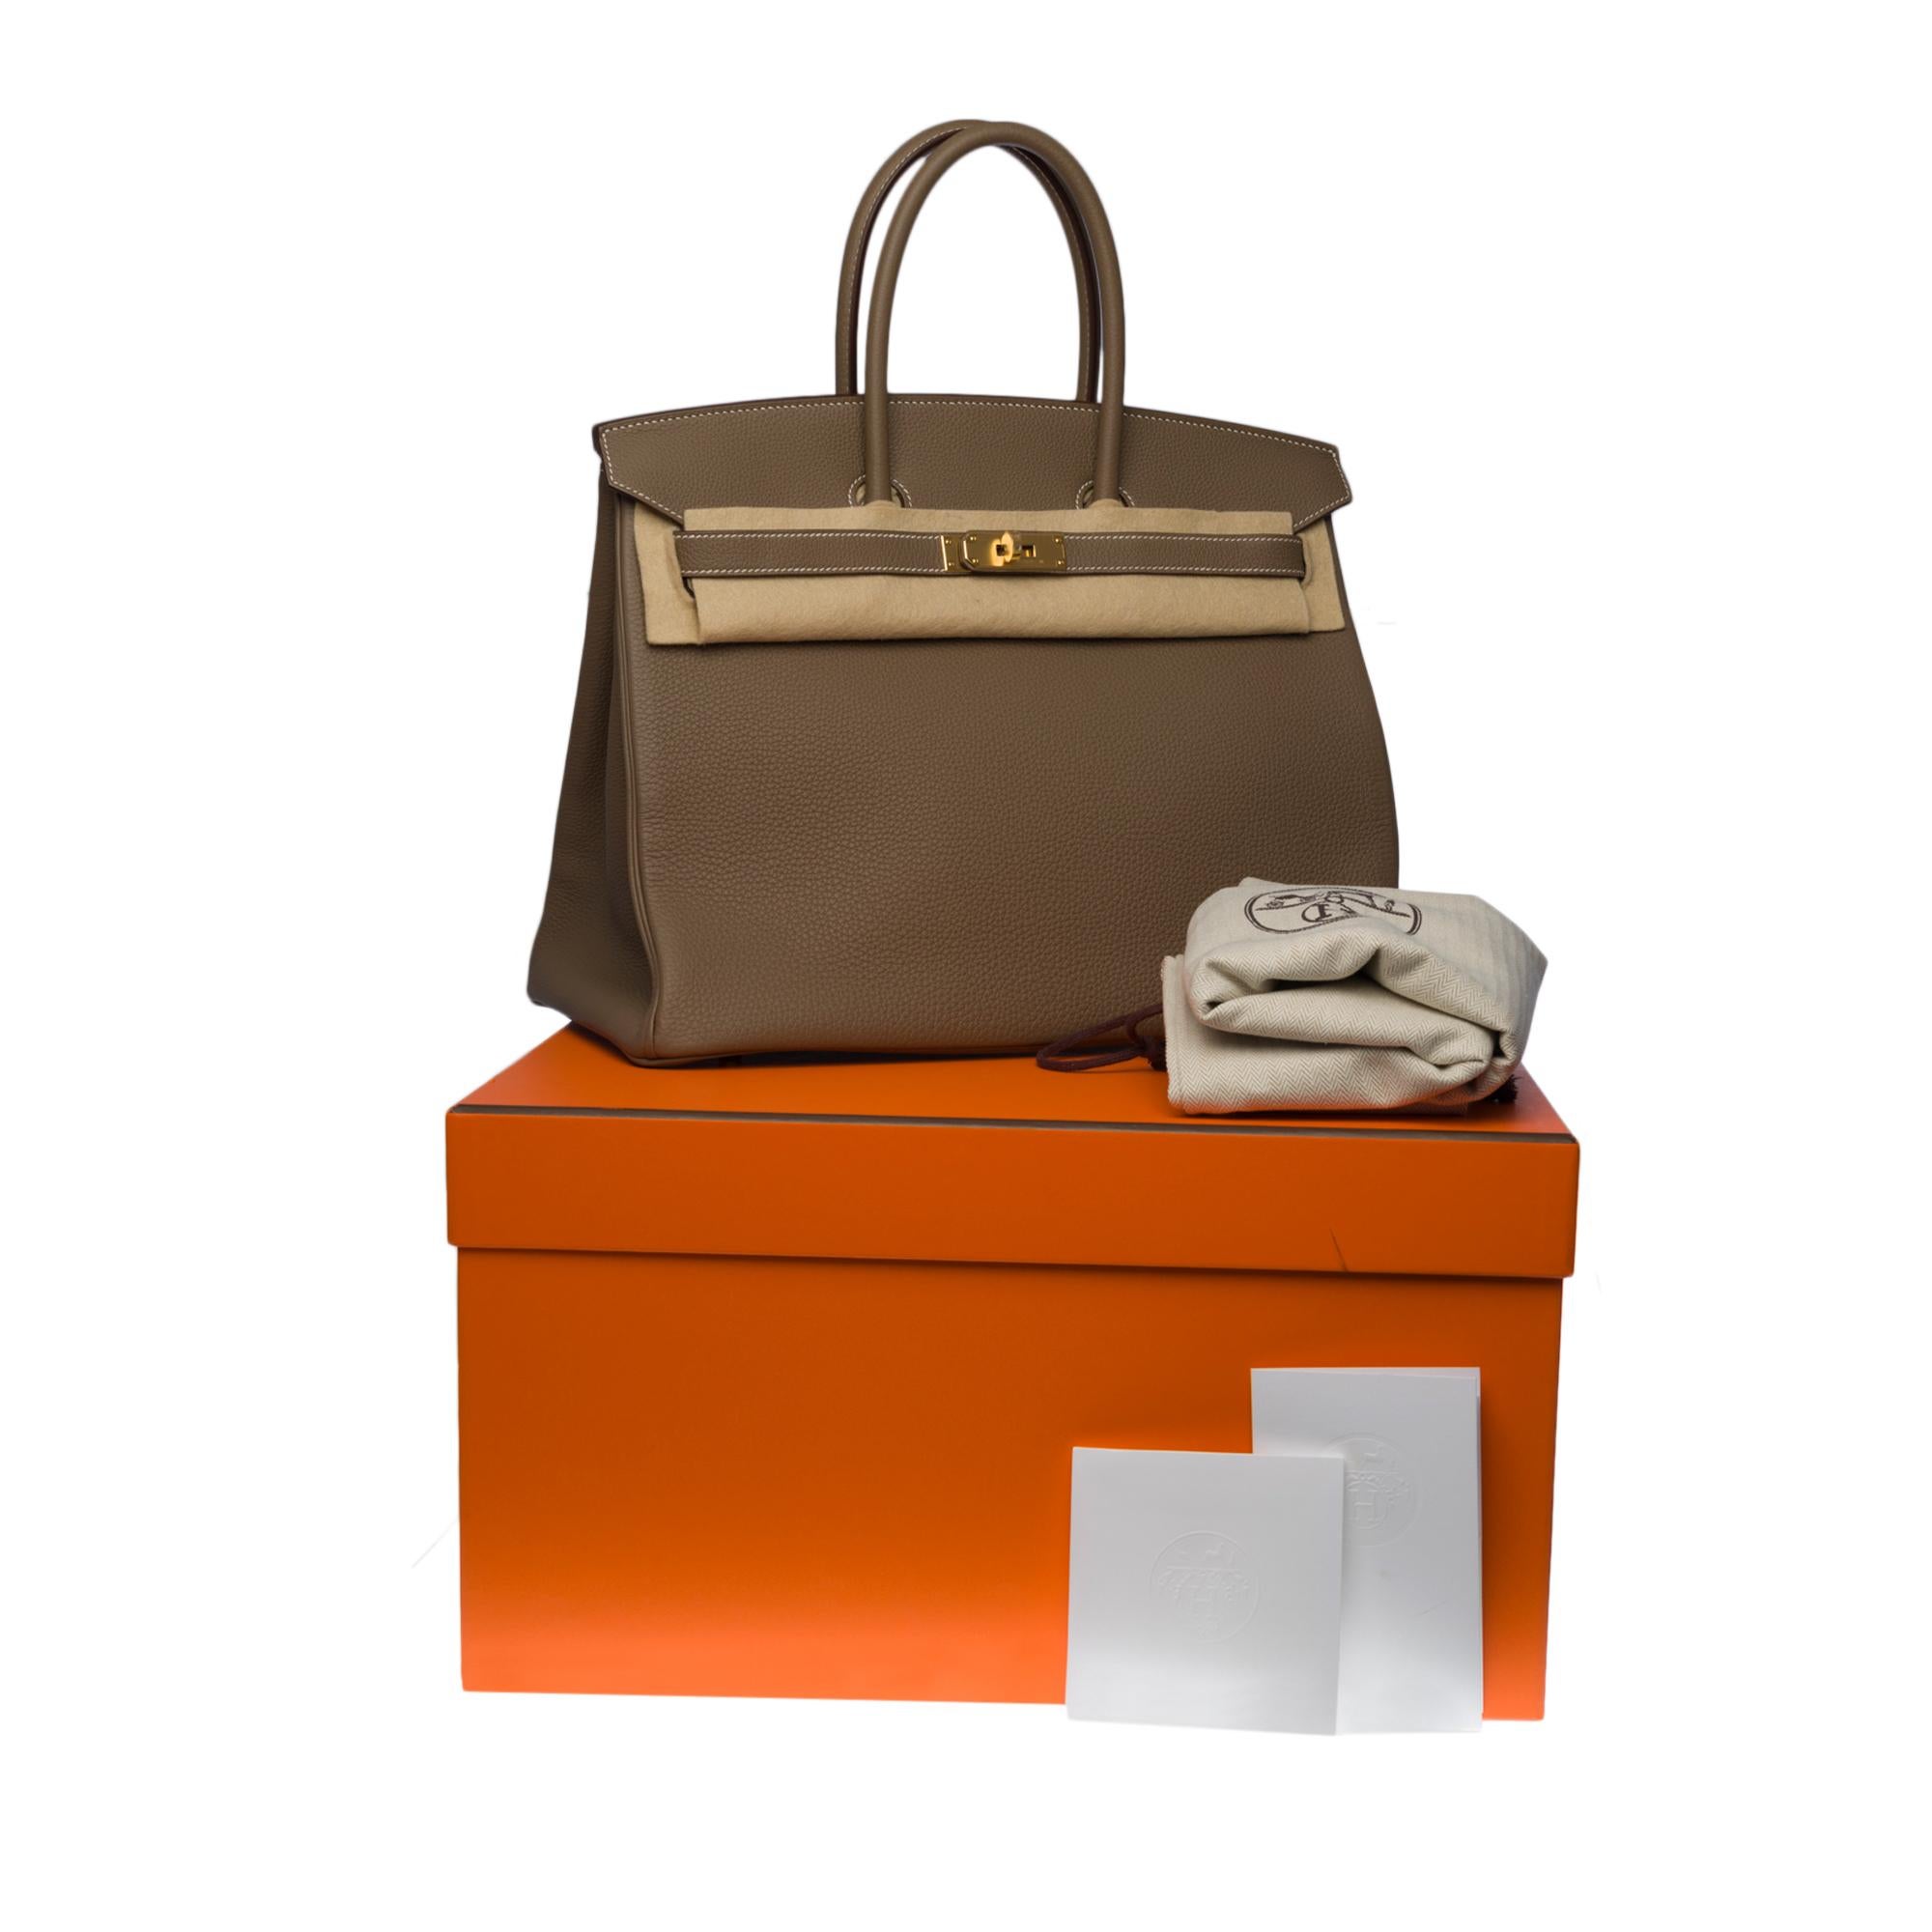 Brand New -Full set-Hermès Birkin 35 handbag in étoupe Togo leather, GHW 4